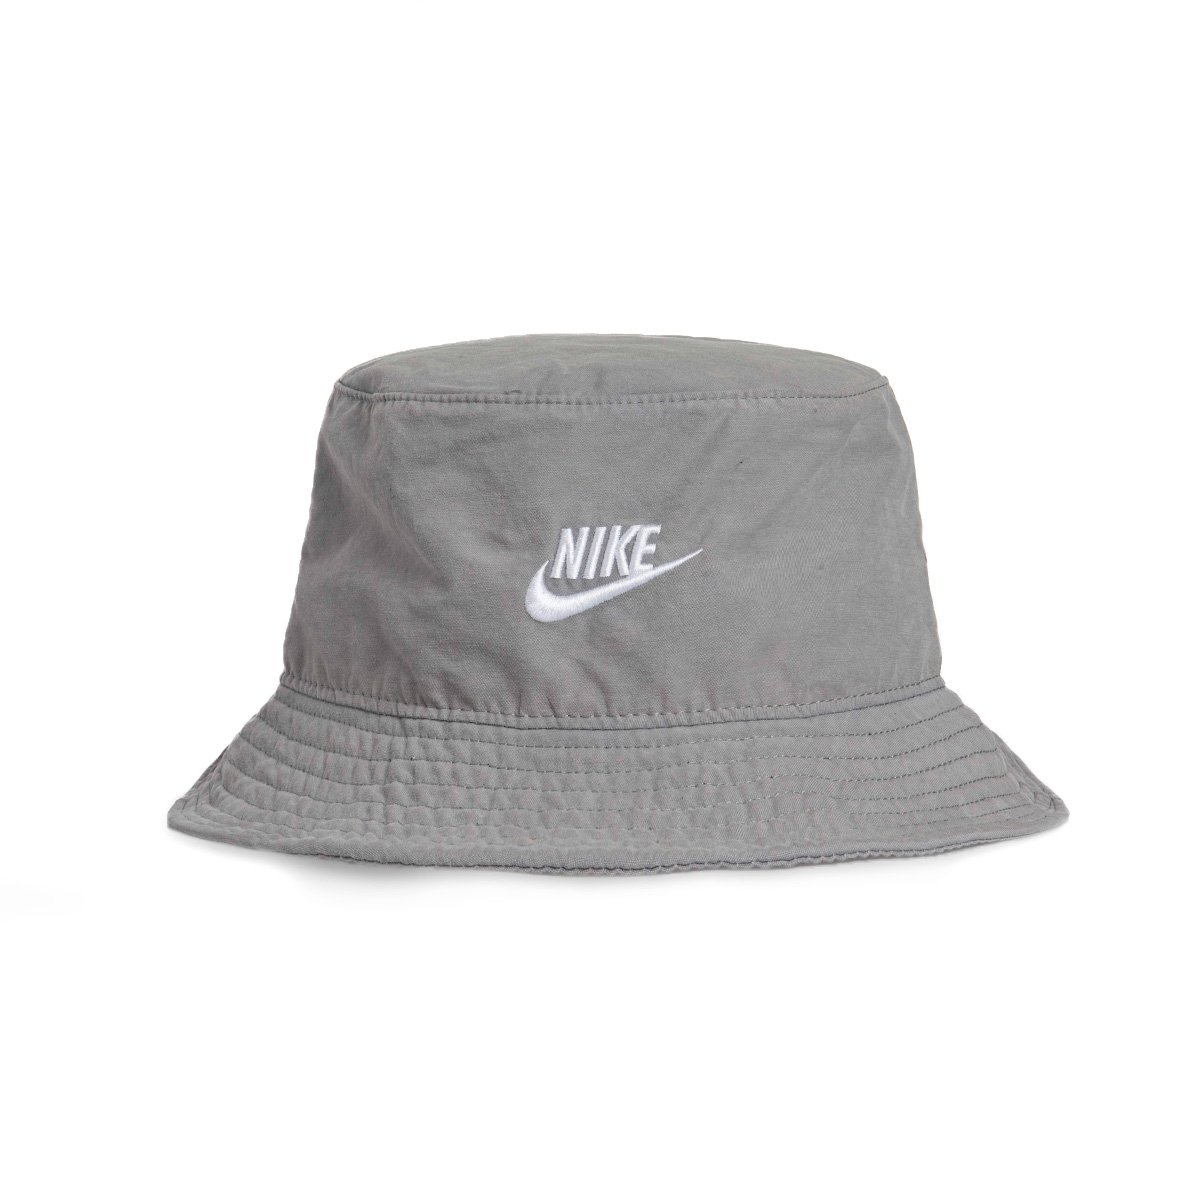 grey nike bucket hat